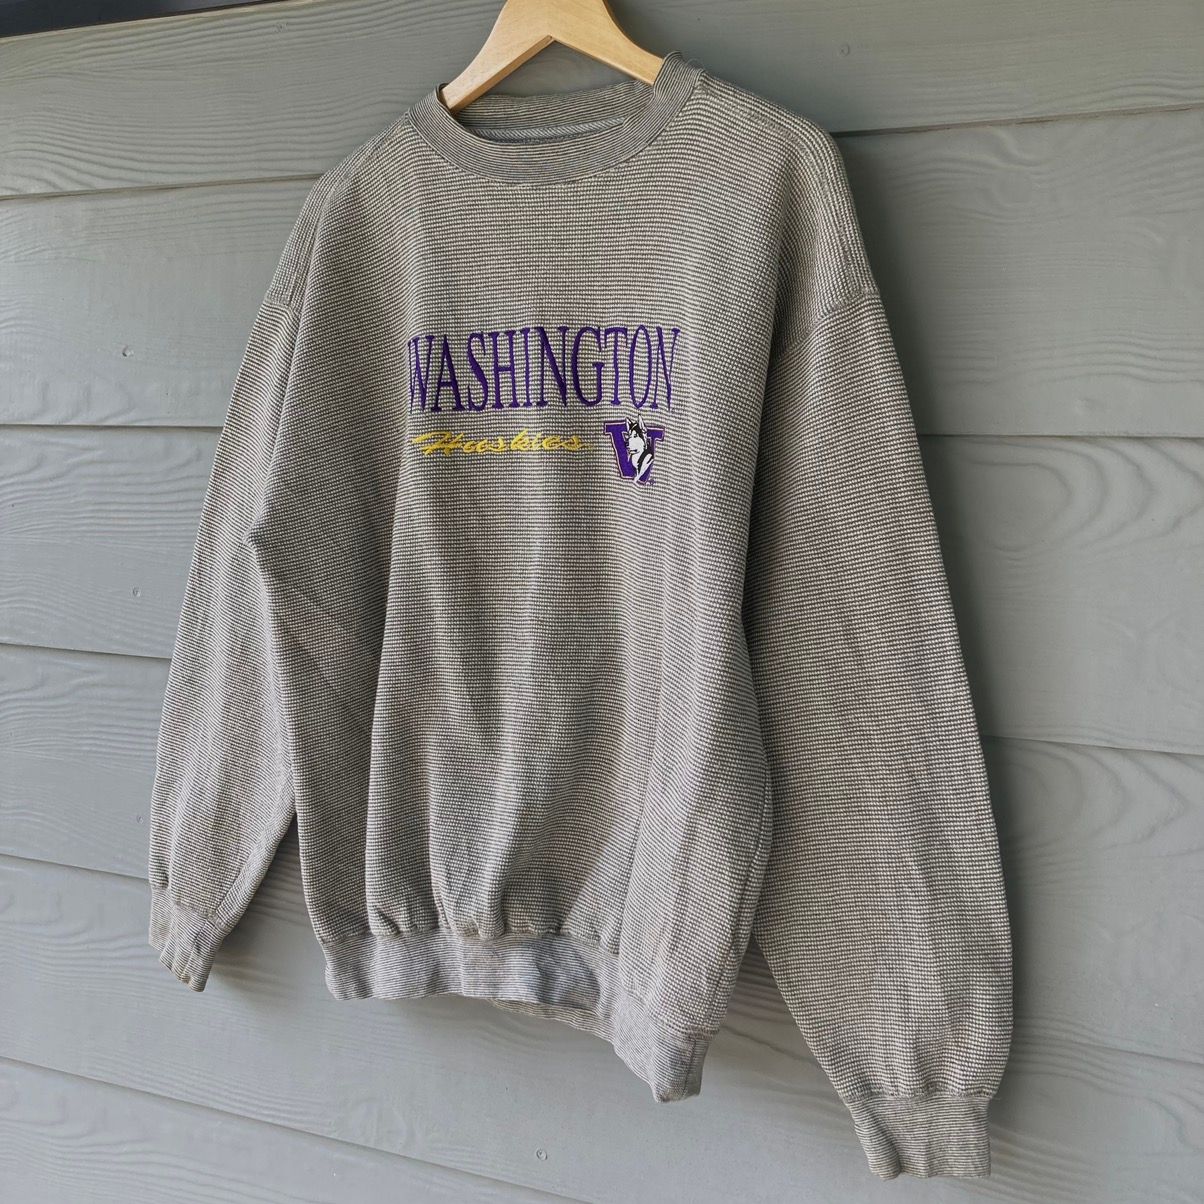 Vintage 90s Washington Huskies University Grey Sweatshirt - 3